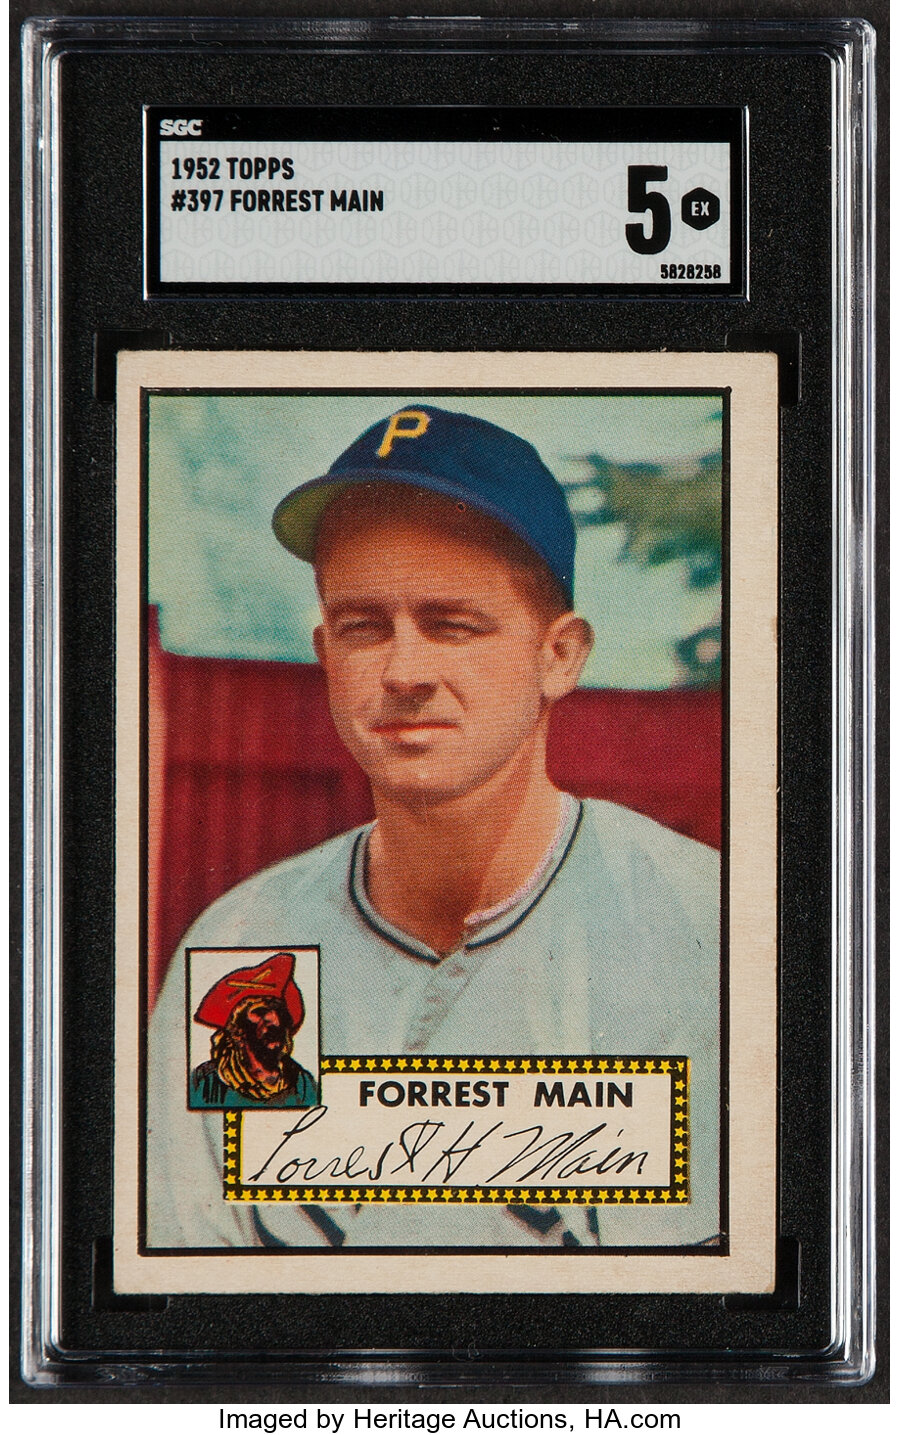 1952 Topps Forrest Main #397 SGC EX 5